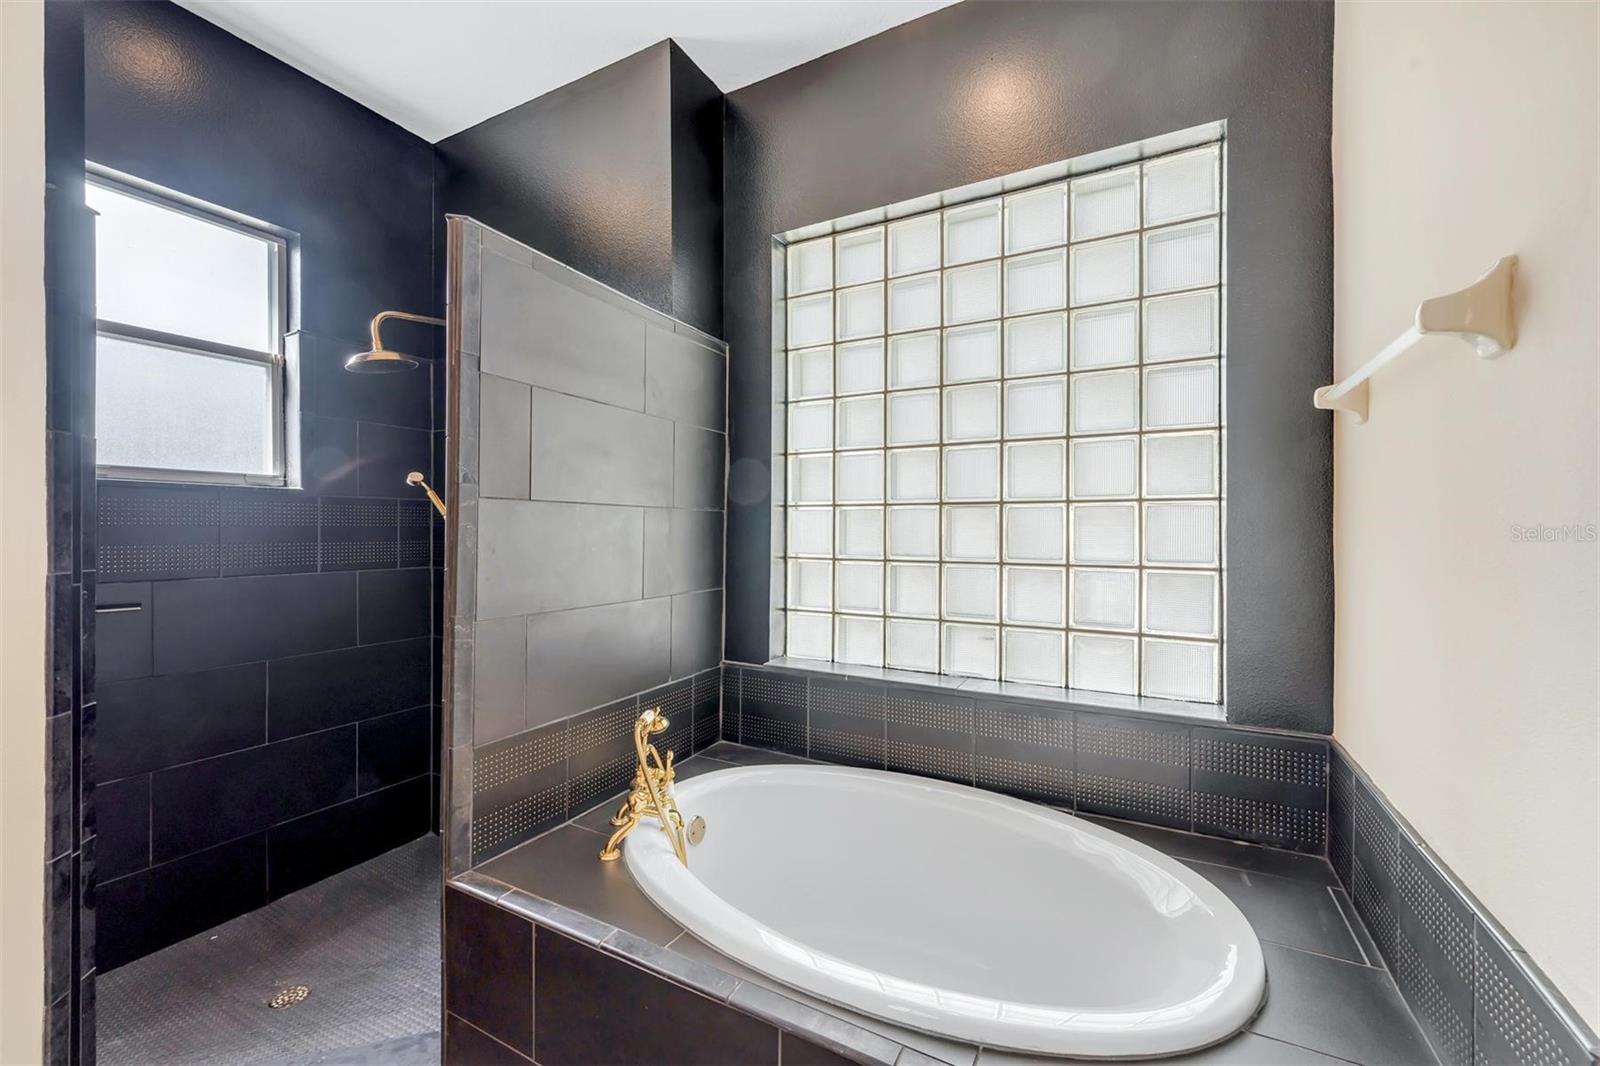 Master Ensuite with split vanities, garden tub, shower stall, water closet with Bidet